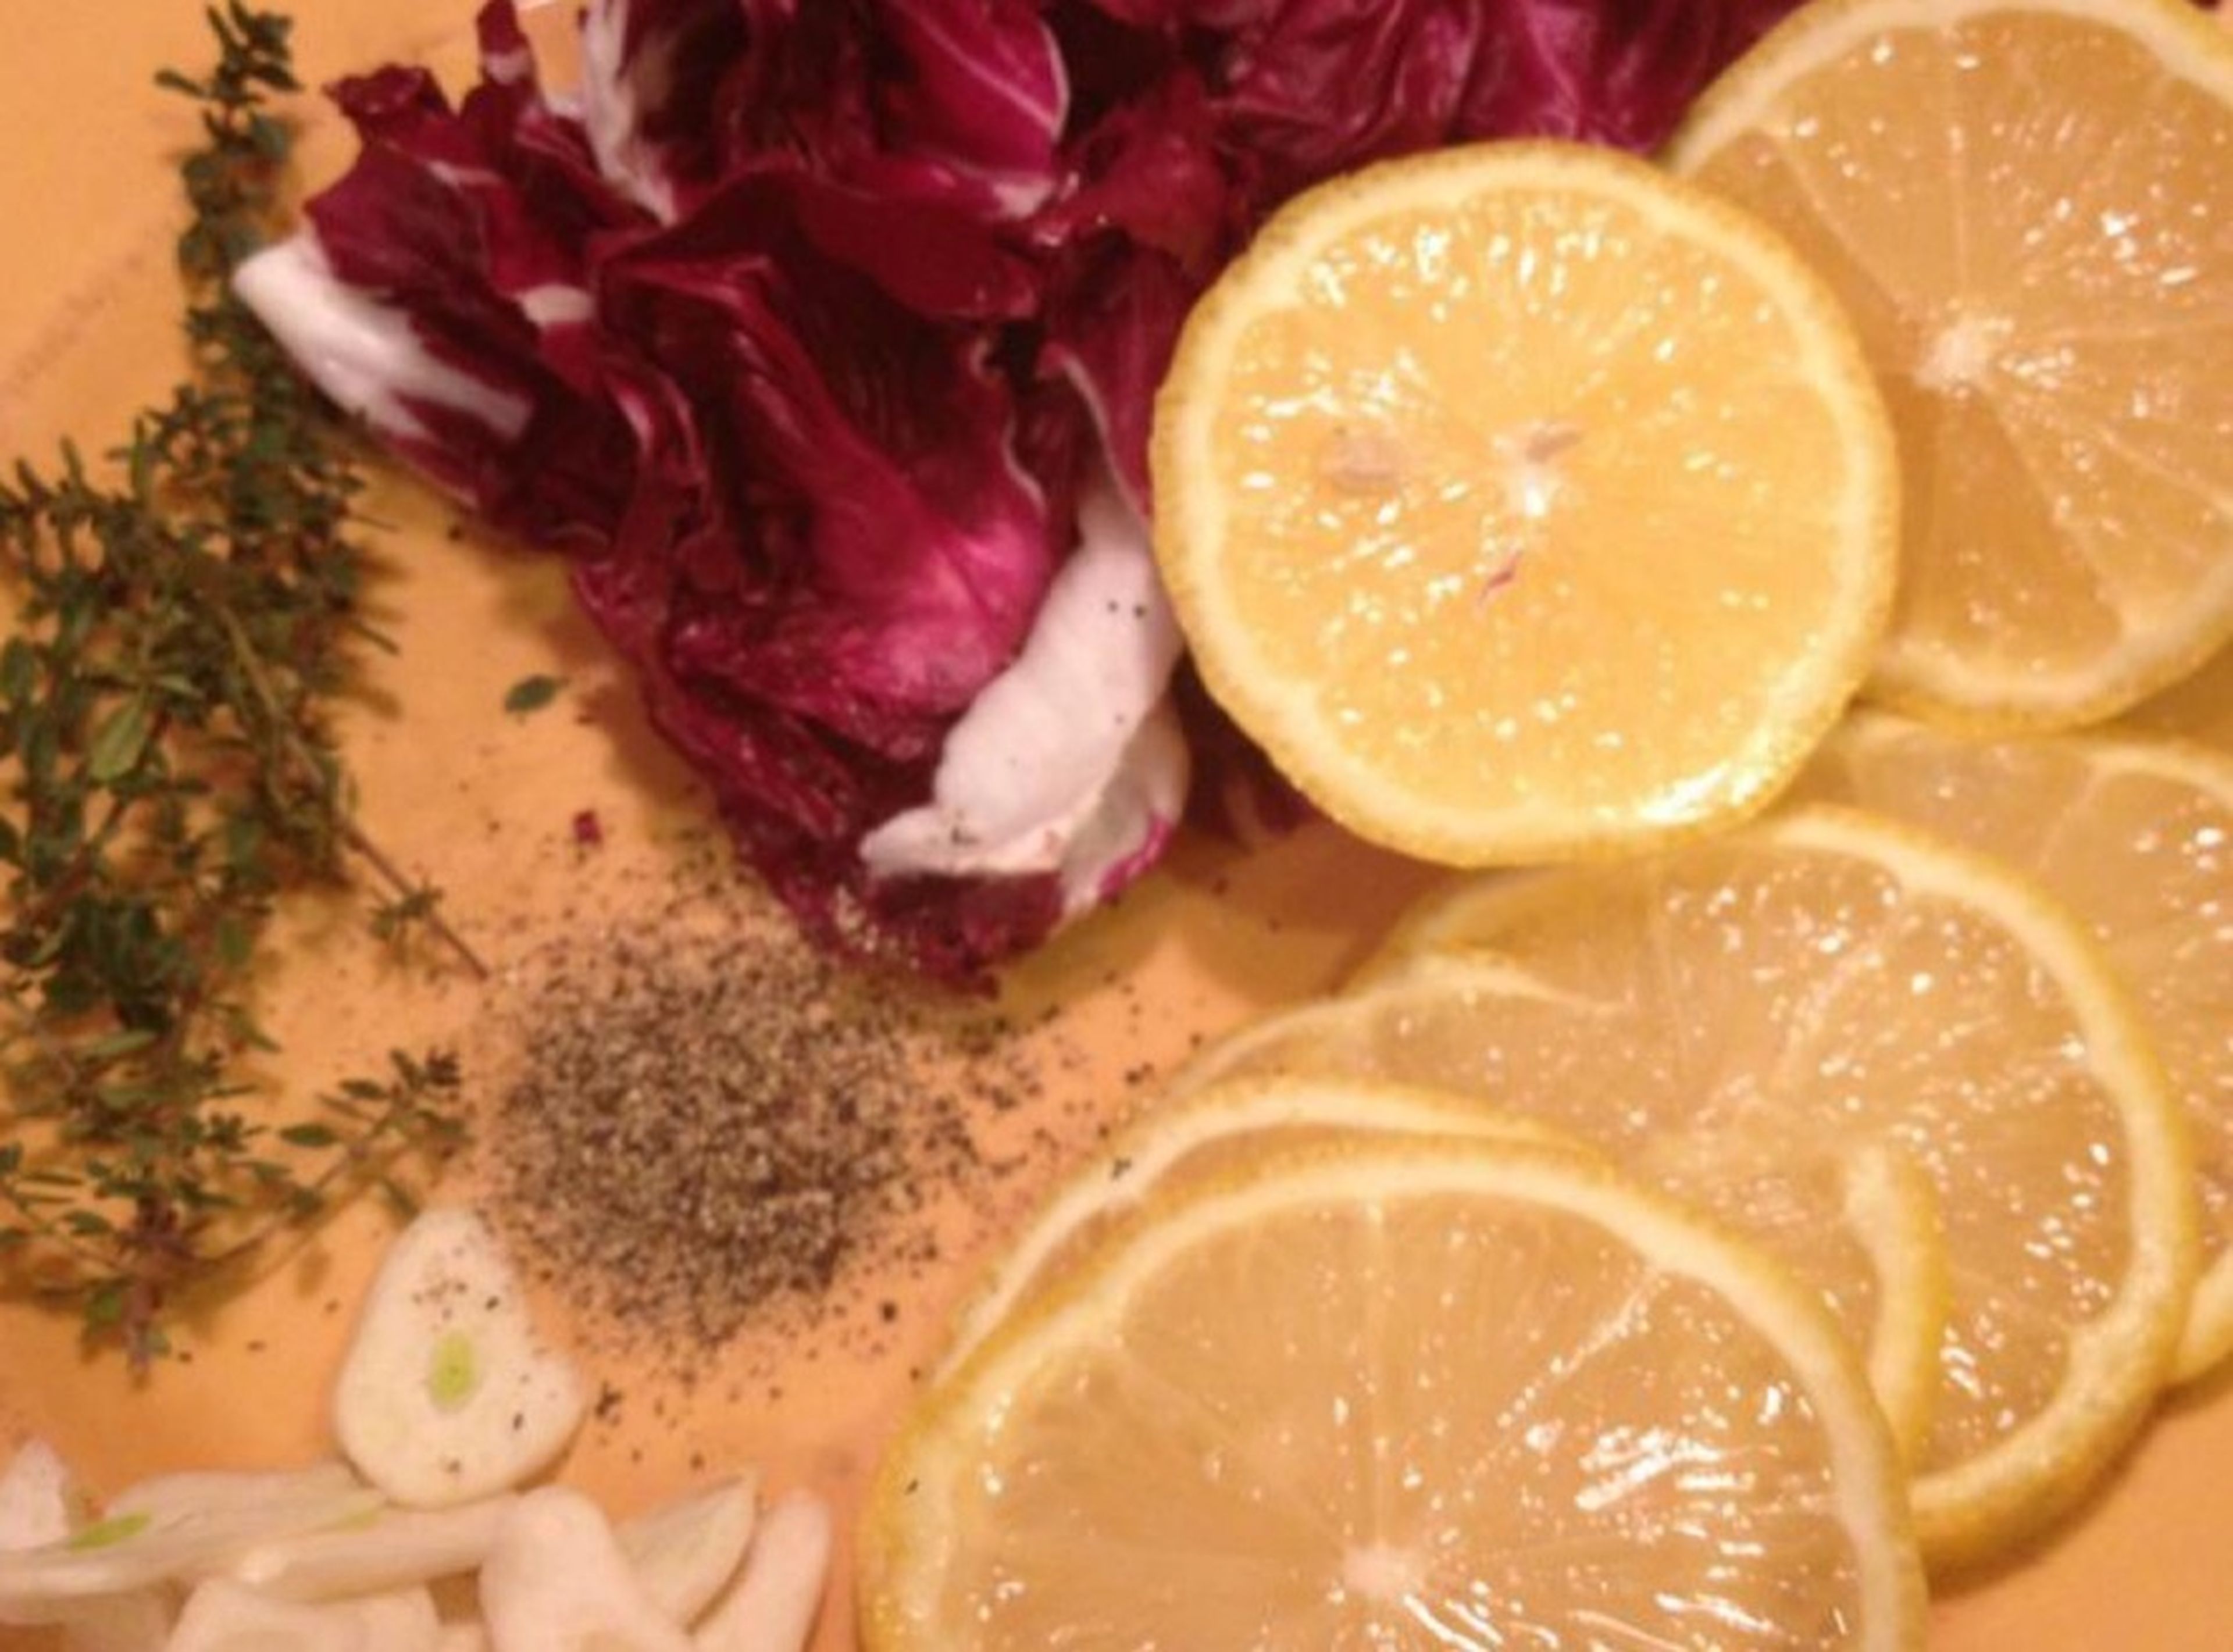 Slice the lemon and garlic. Separate leaves of radicchio.